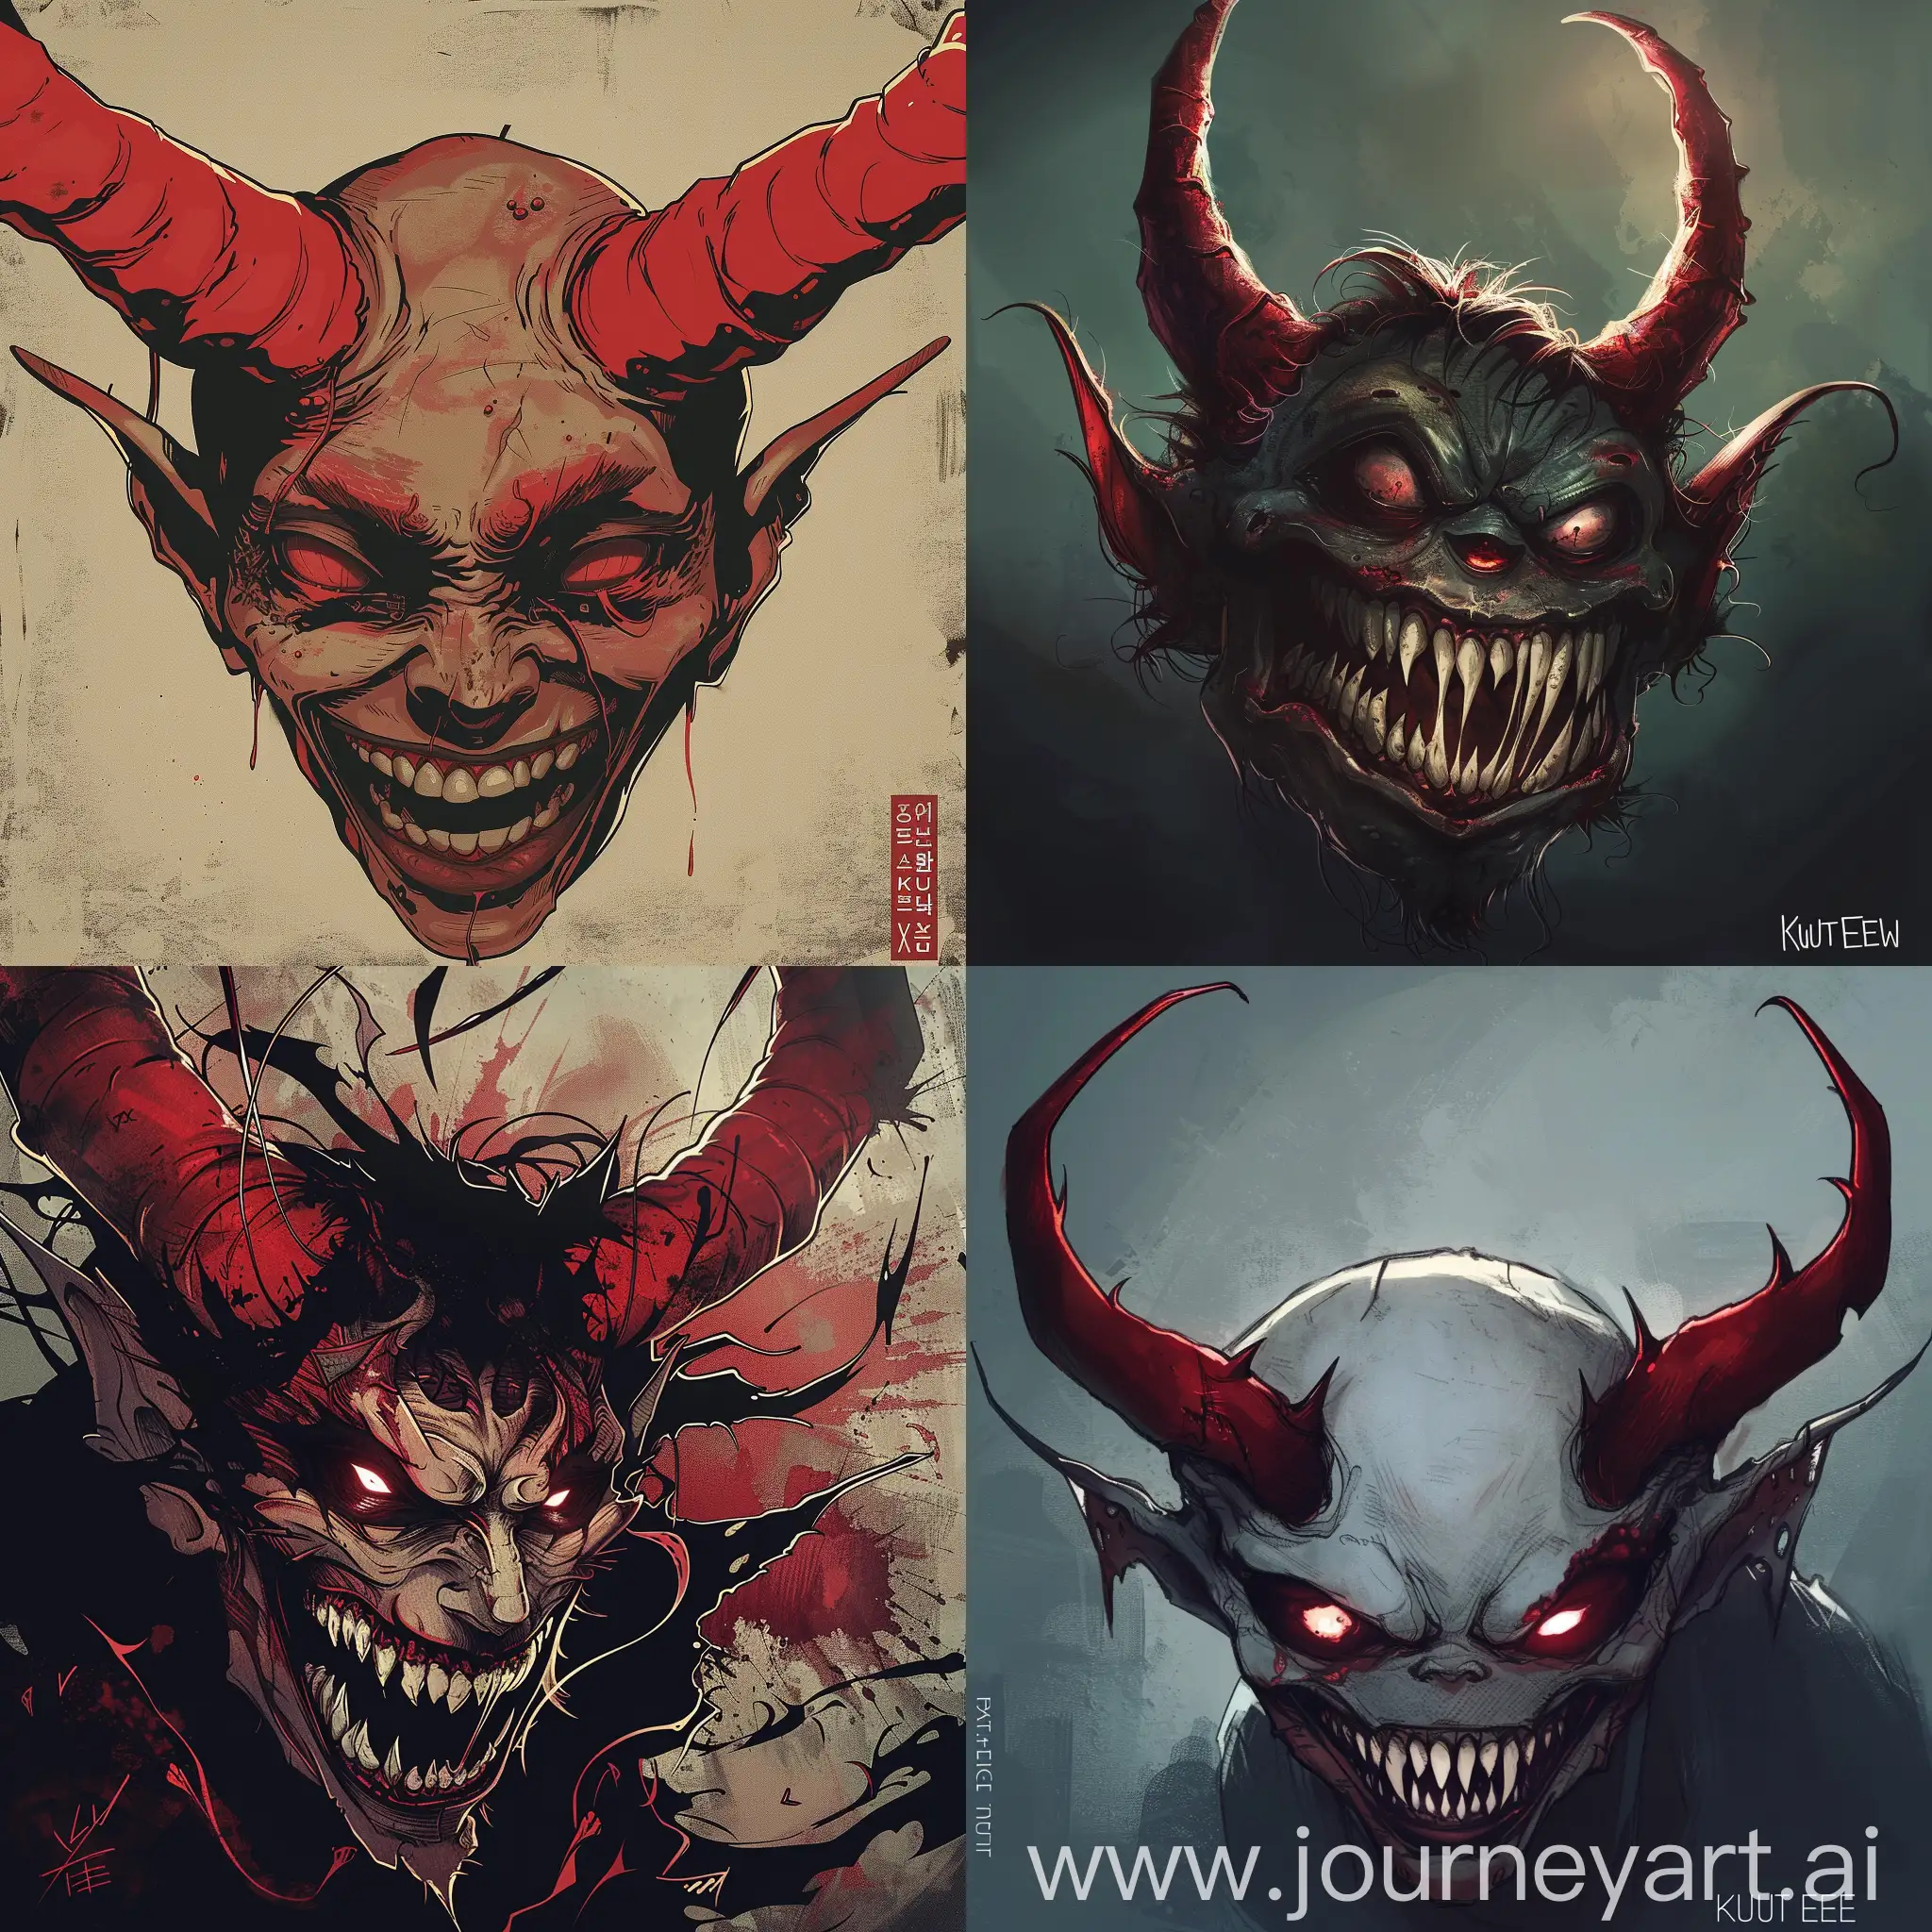 Anime style illustration of an evil with red horns, ugly evil face, horror, evil smile, art, illustration by Kyutae Lee